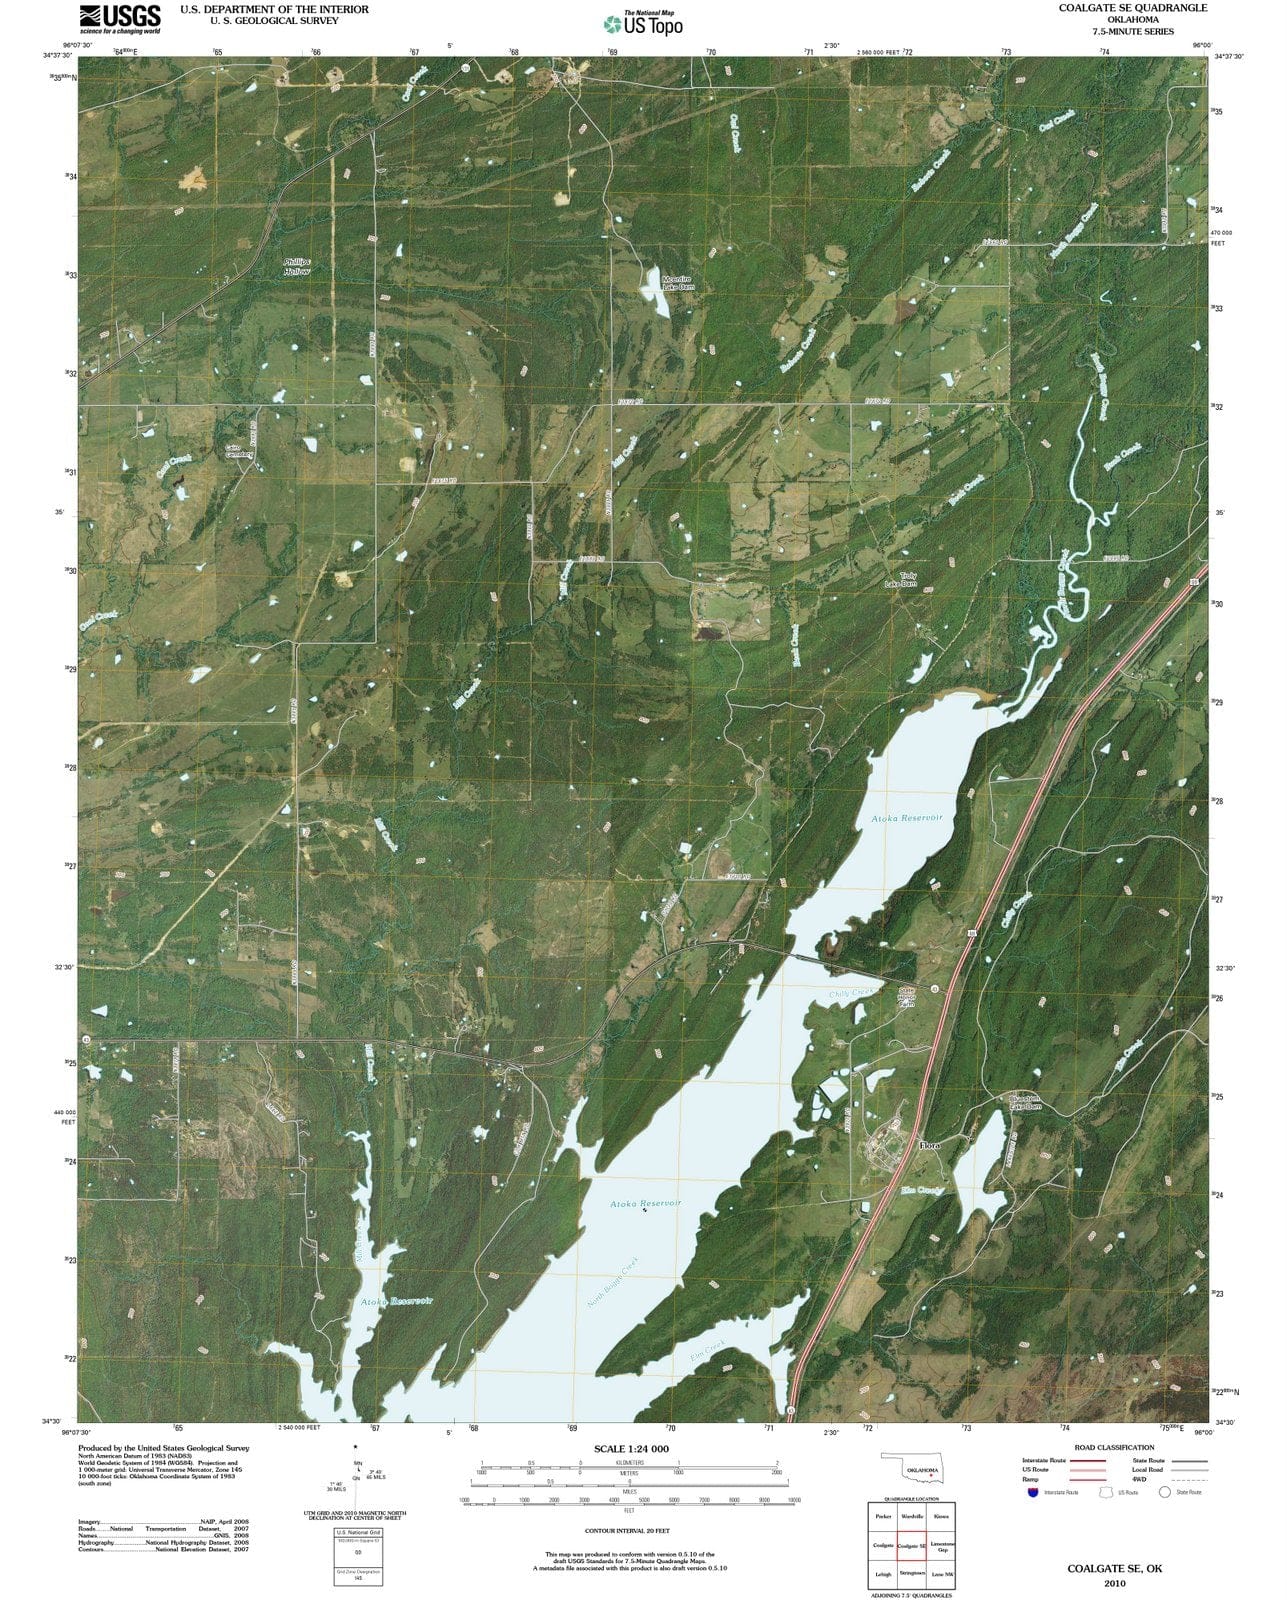 2010 Coalgate, OK - Oklahoma - USGS Topographic Map